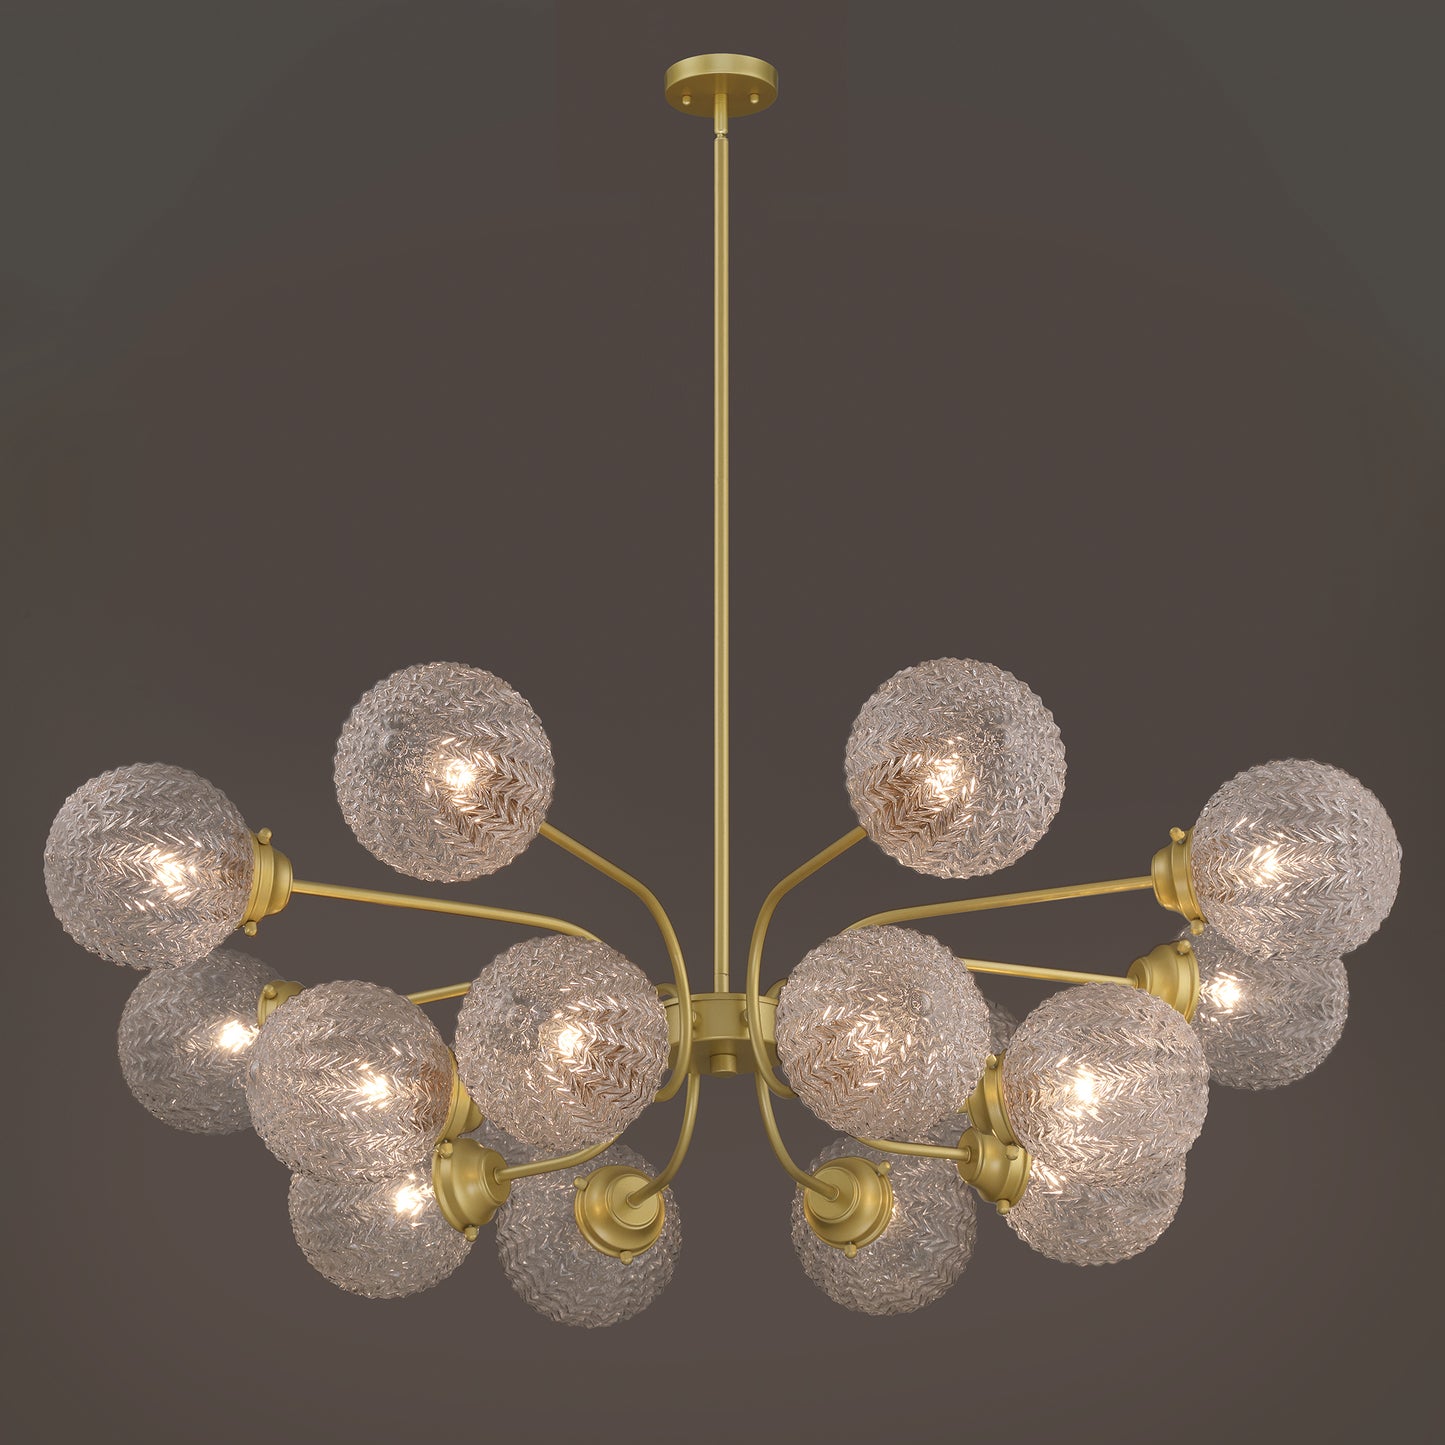 16 light sputnik empire chandelier (7) by ACROMA